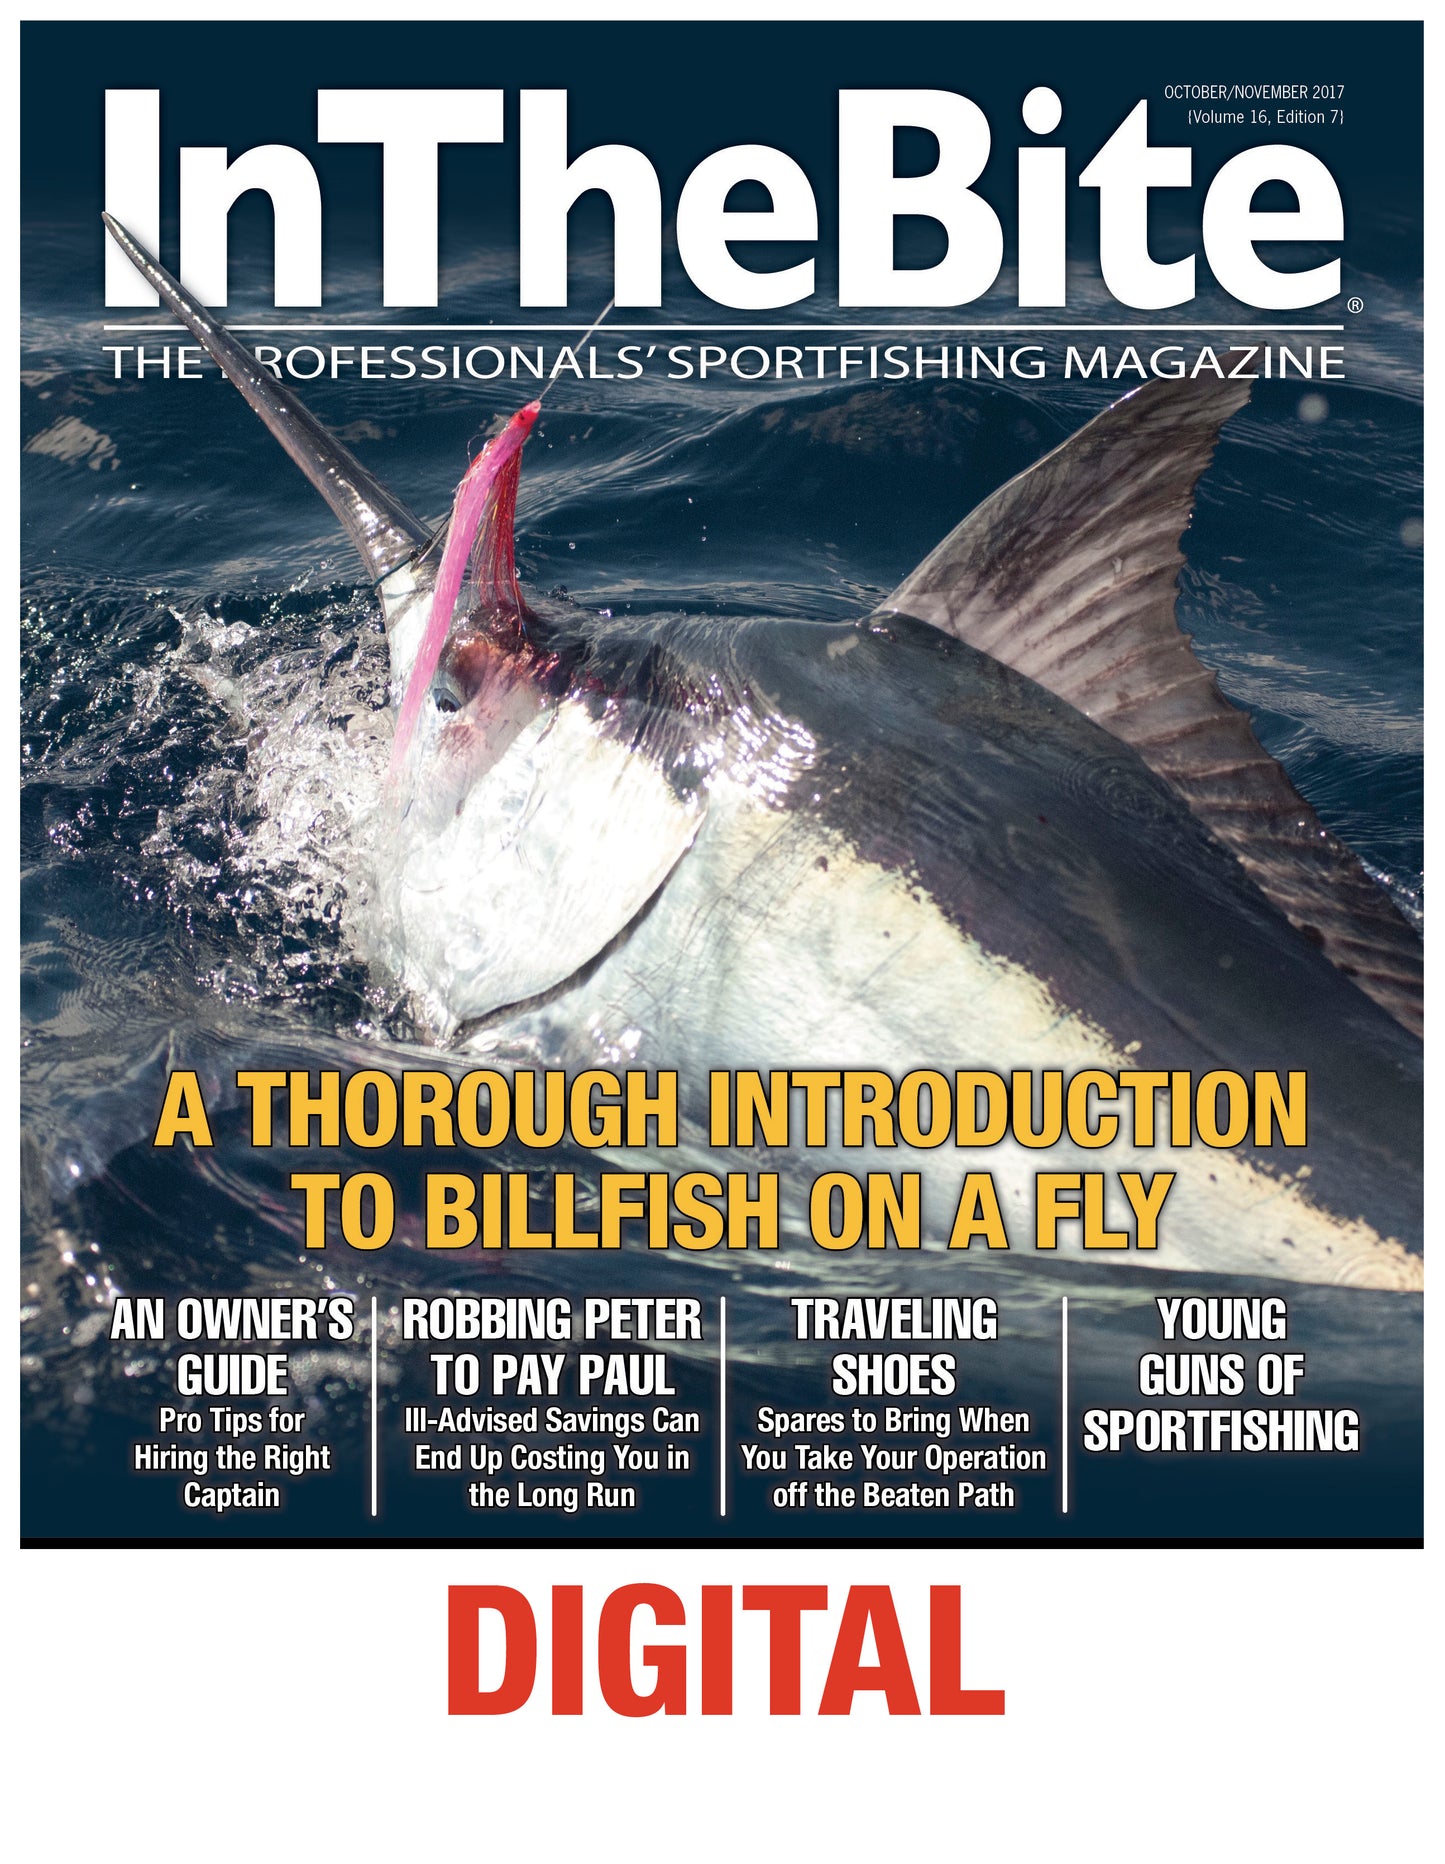 InTheBite Volume 16 Edition 08 - December 2017 - Digital Edition